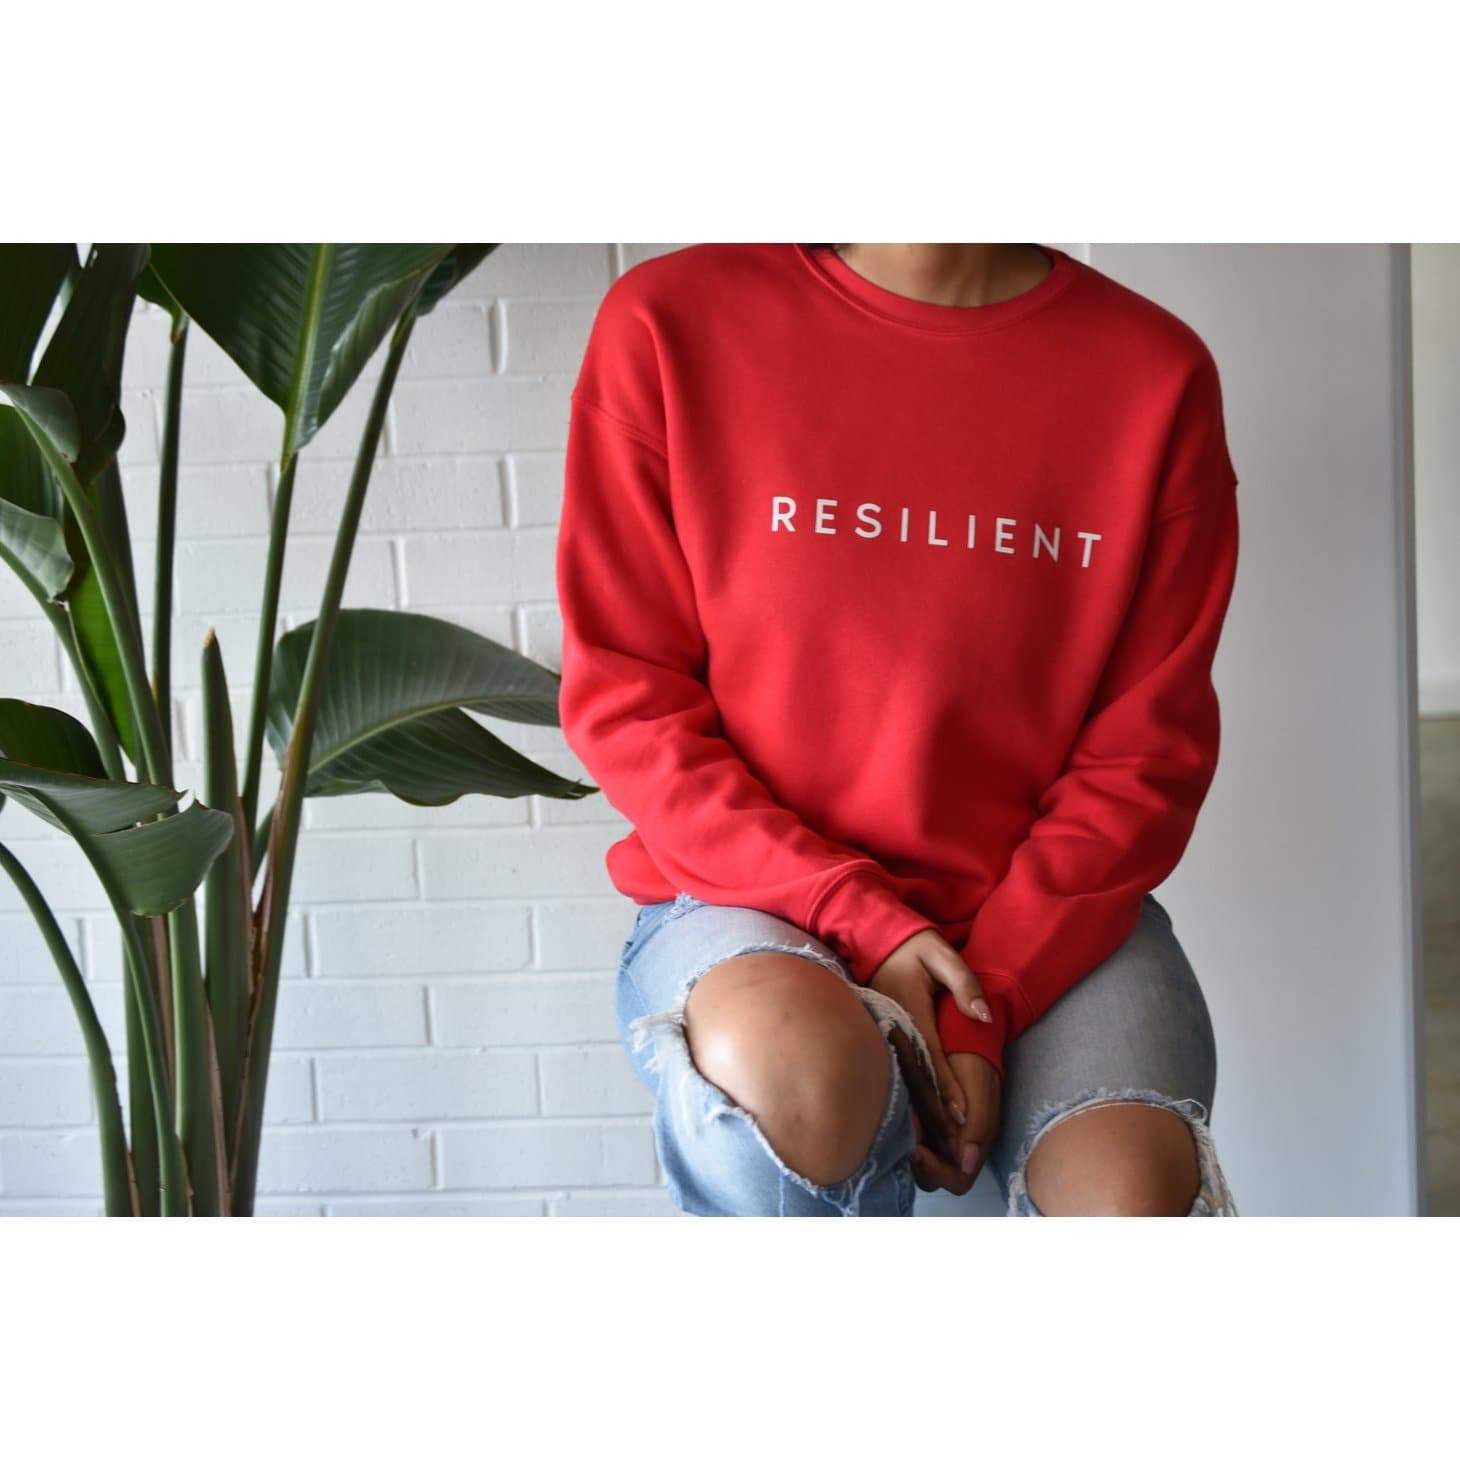 Resilient Sweatshirt - Red